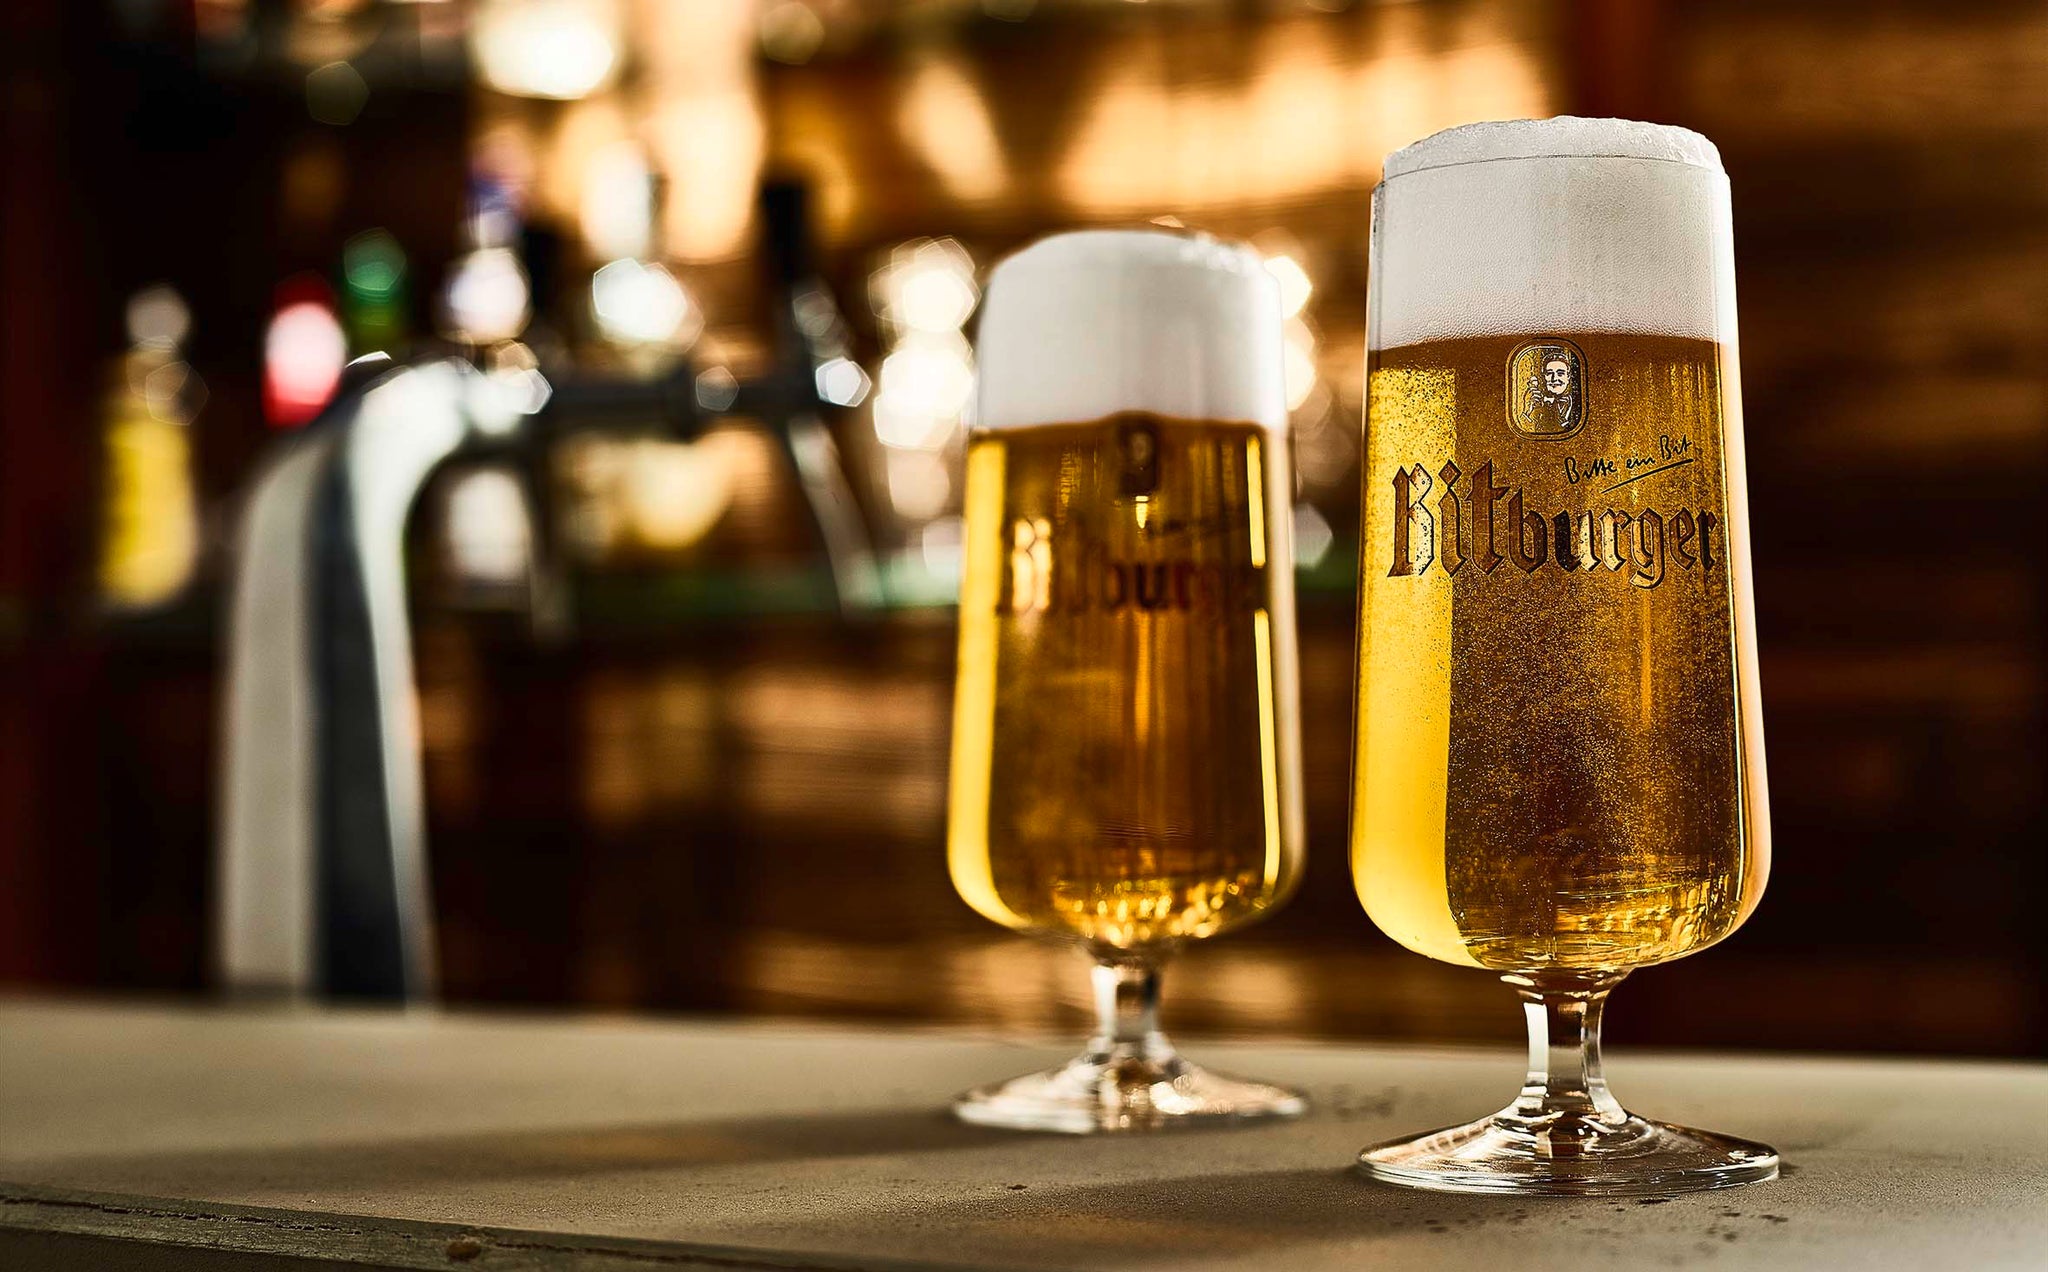 pilsner beer originated in this european country